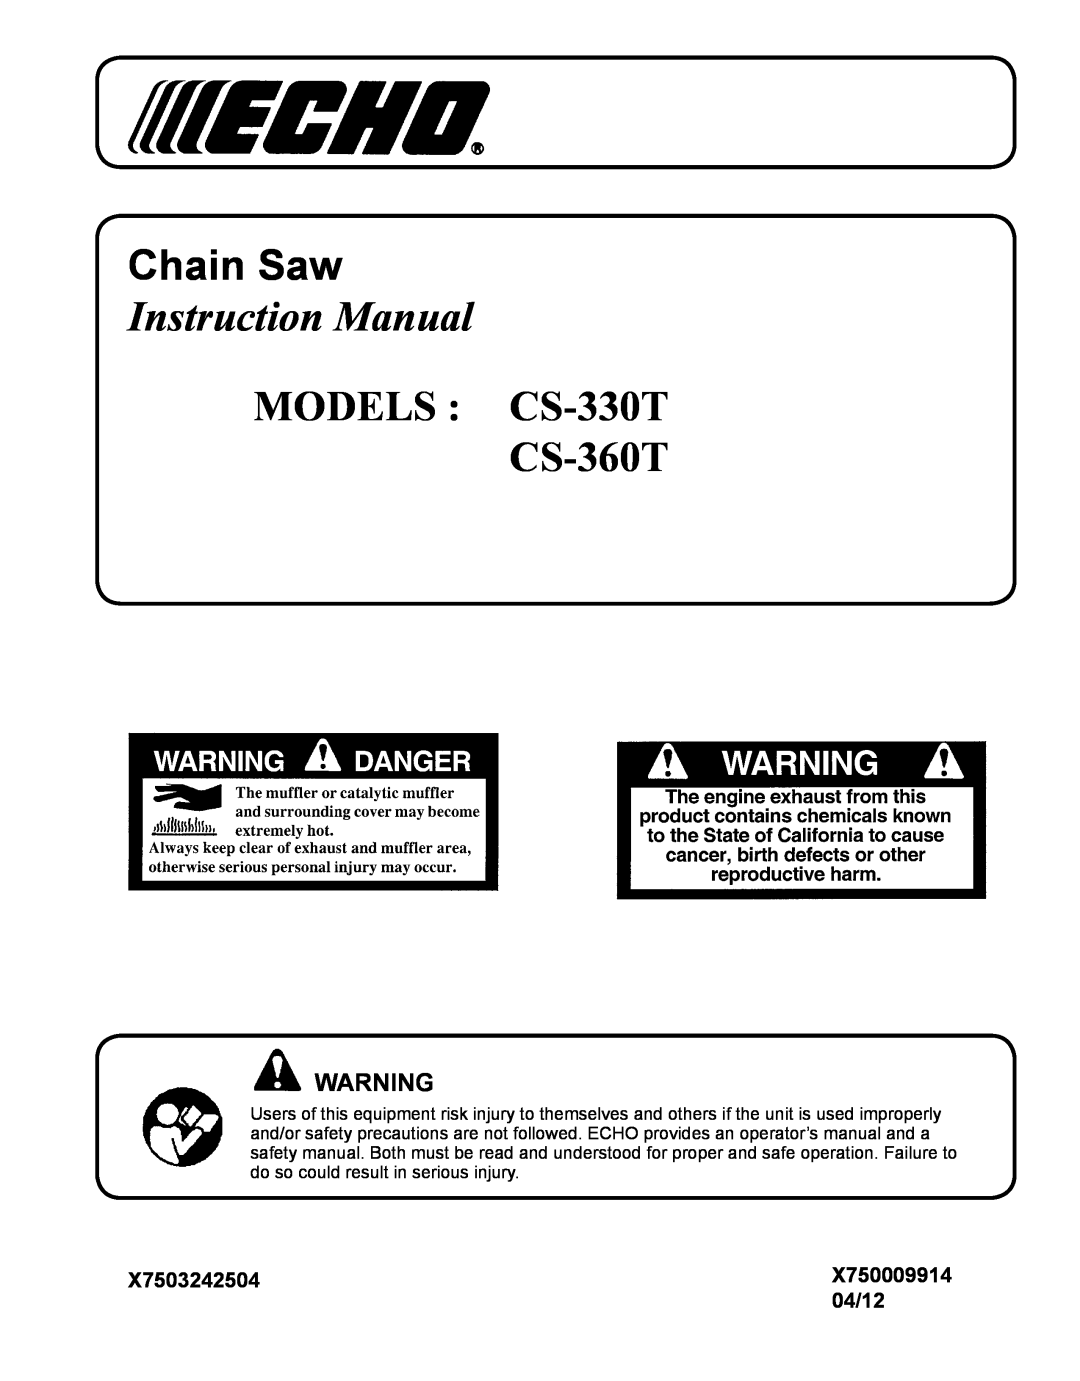 Echo instruction manual X7503242504, 04/12, Chain Saw, MODELS CS-330T CS-360T 